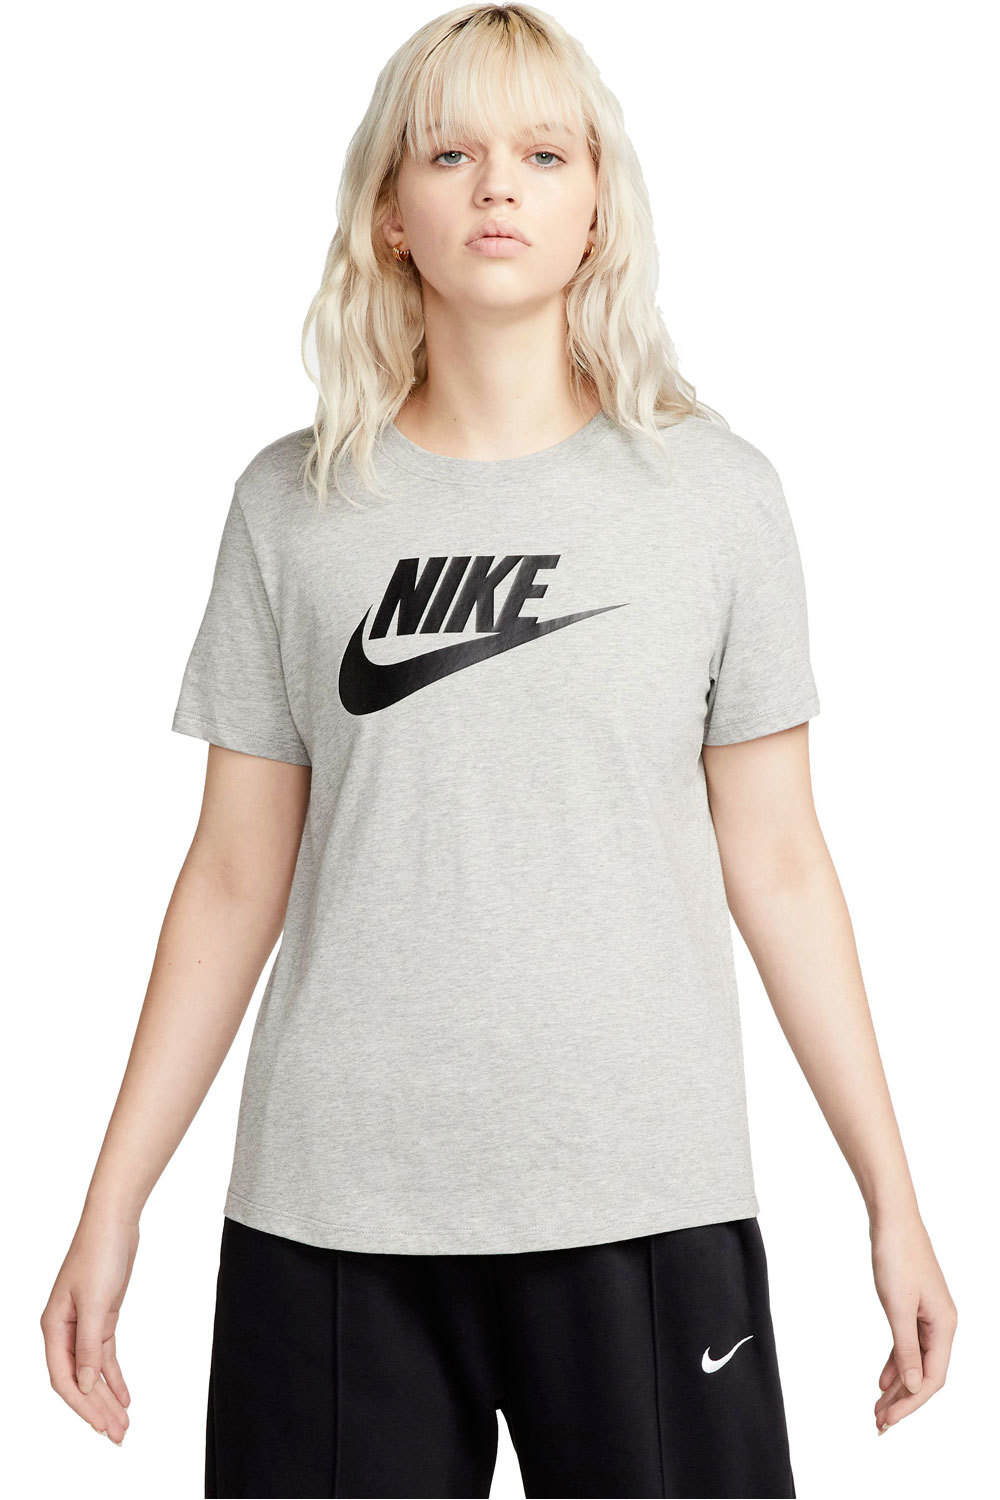 Nike camiseta manga corta mujer W NSW TEE ESSNTL ICN FTRA vista frontal